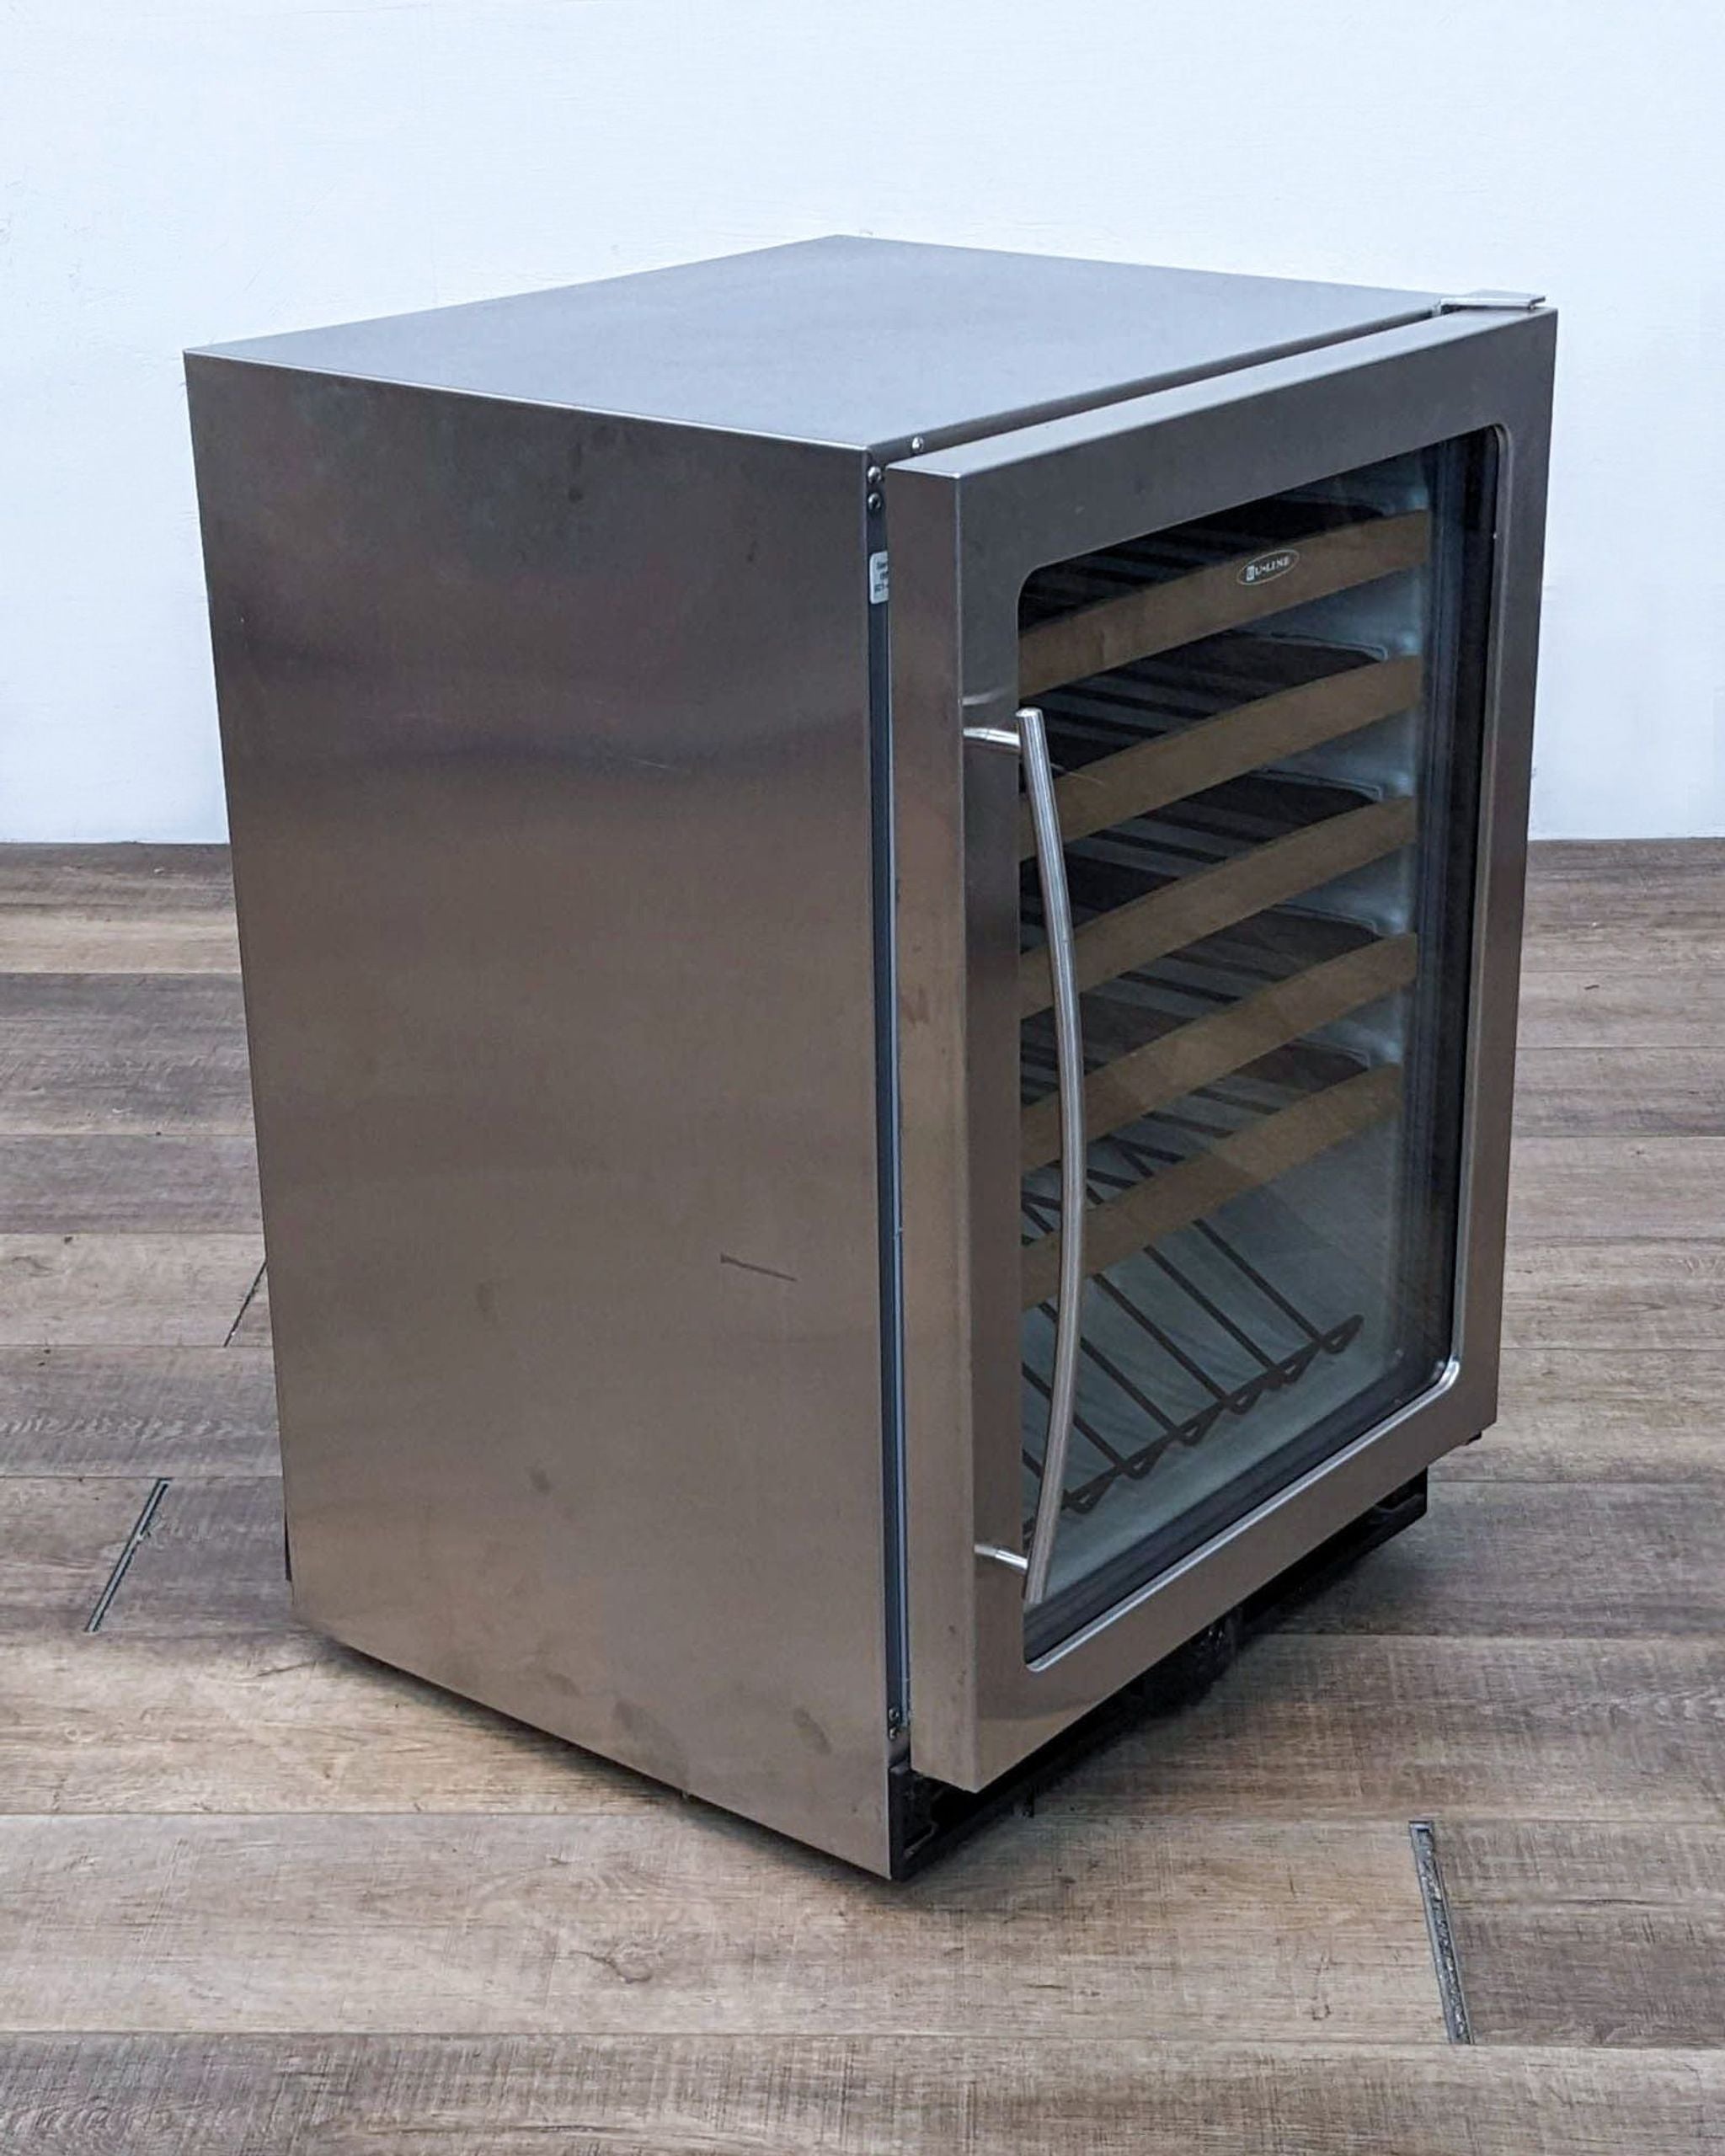 Stainless steel U-Line refrigerator, door ajar, showcasing internal racking, with a side view of its sleek design.